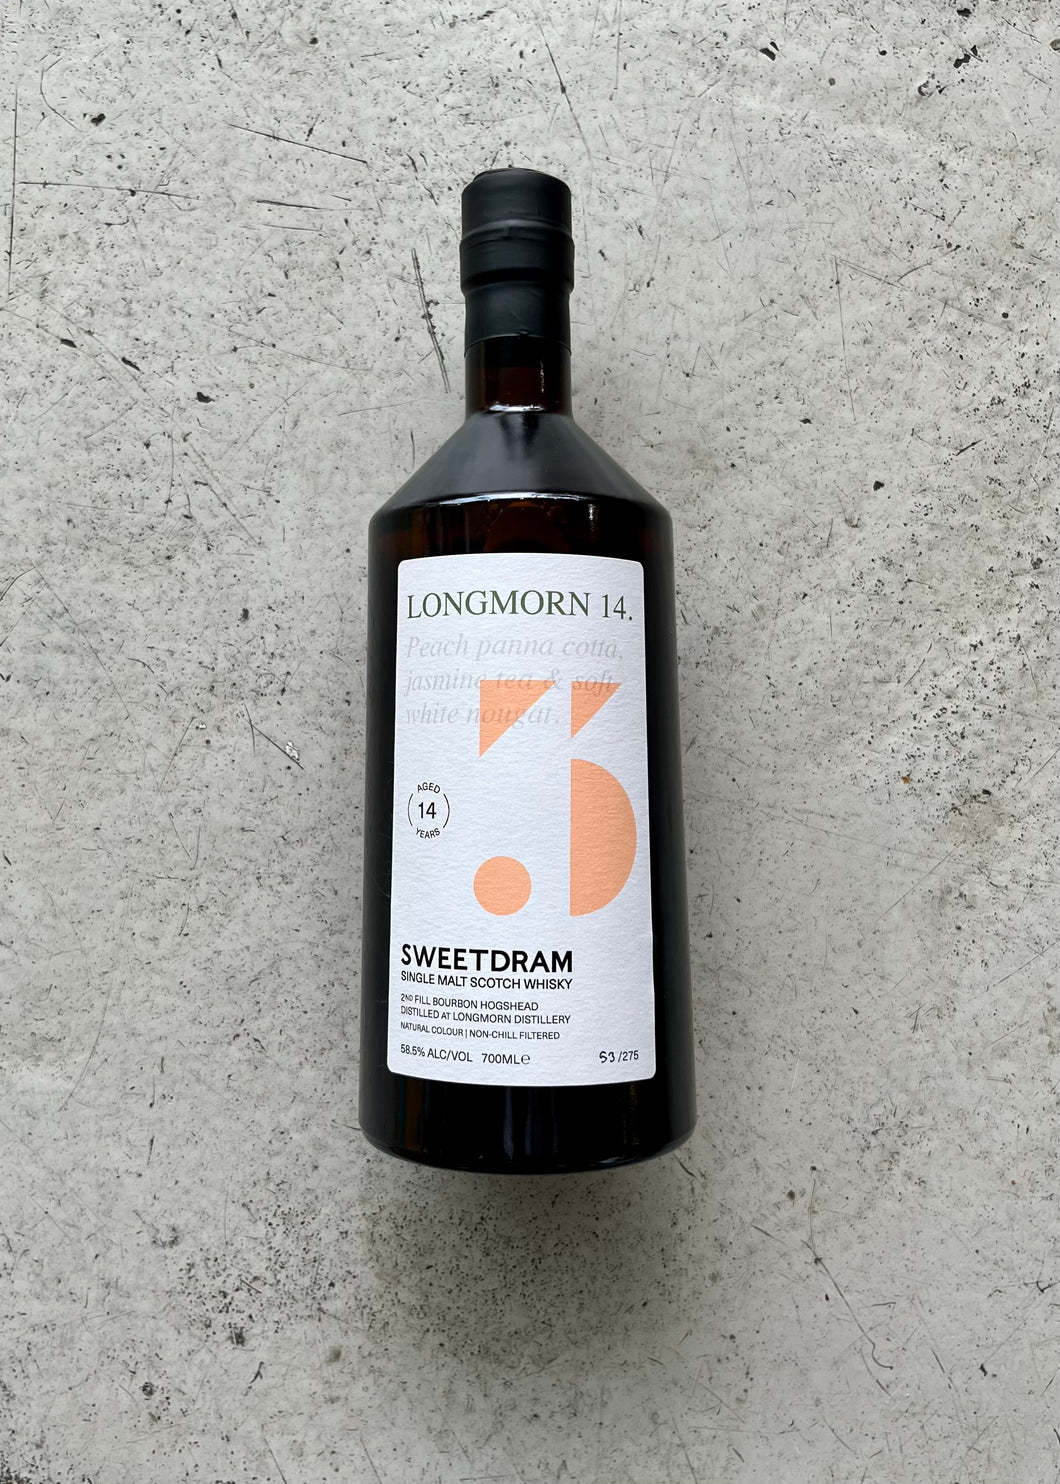 Sweetdram Longmorn 14 Year Old Single Cask Scotch Malt Whisky 58.5% (700ml)